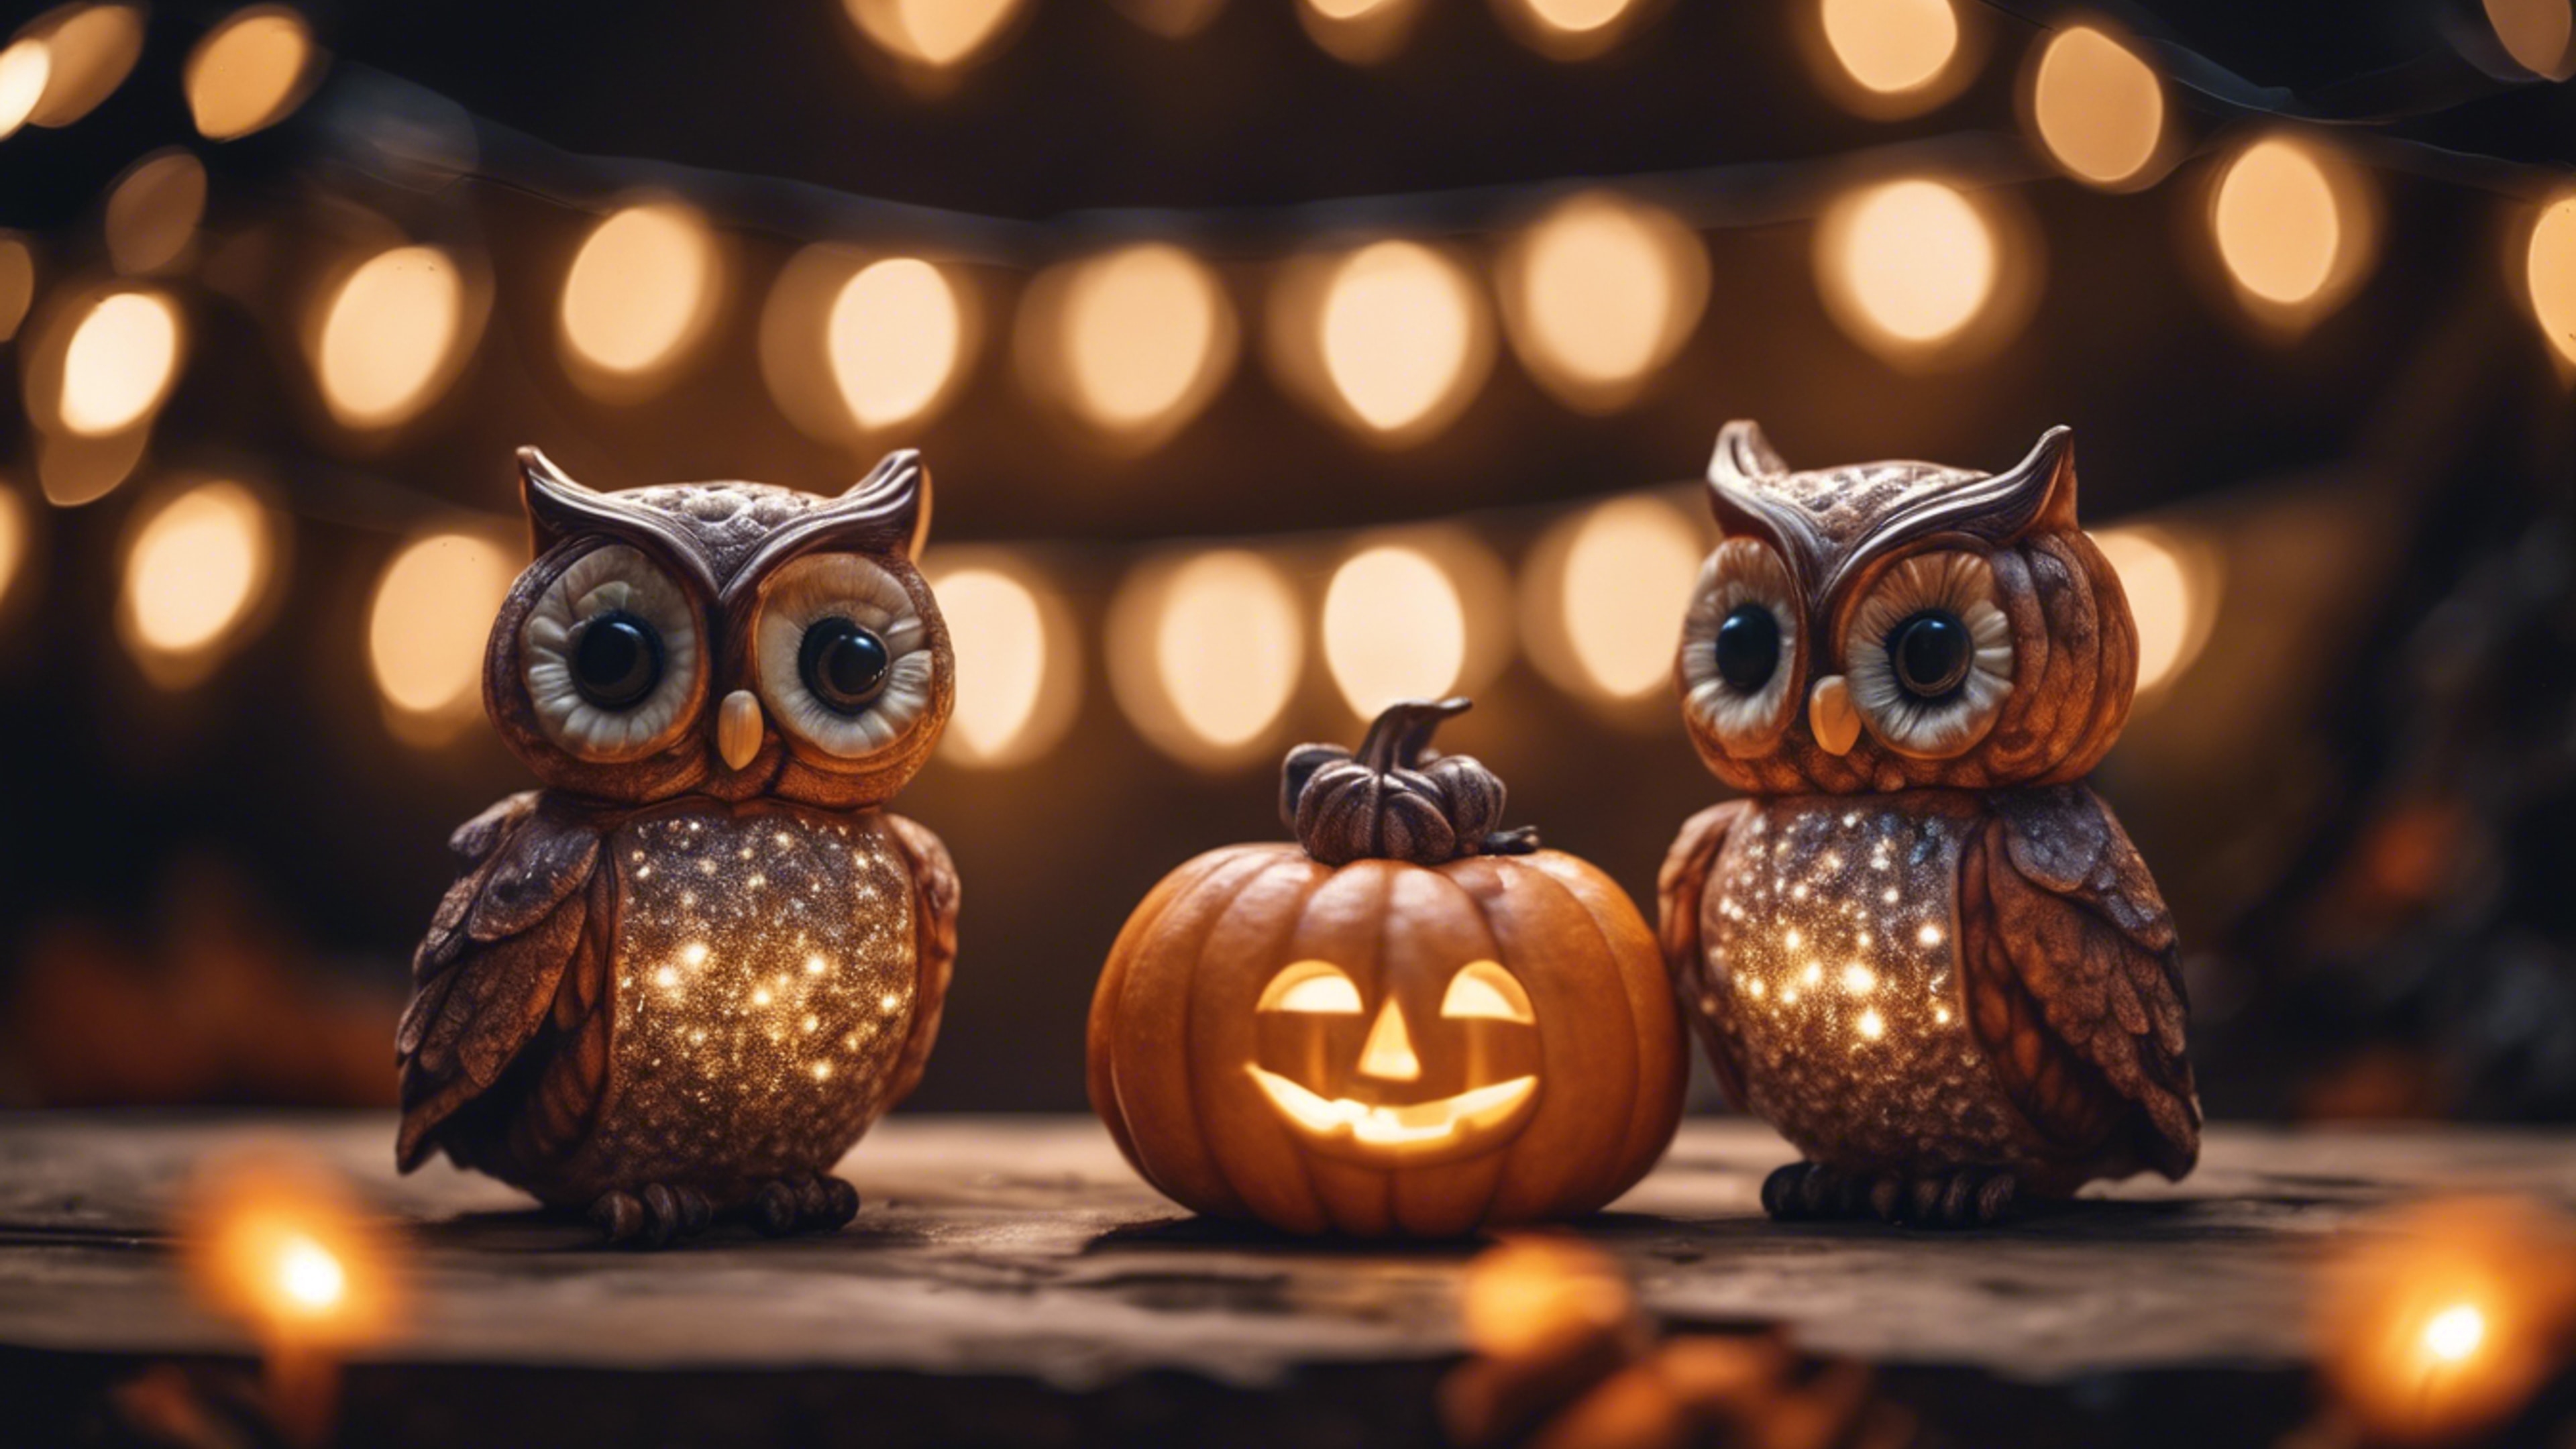 A pair of kawaii owls sitting on a pumpkin under twinkling fairy lights on Halloween night Hintergrund[39849ffb0d78427c9221]